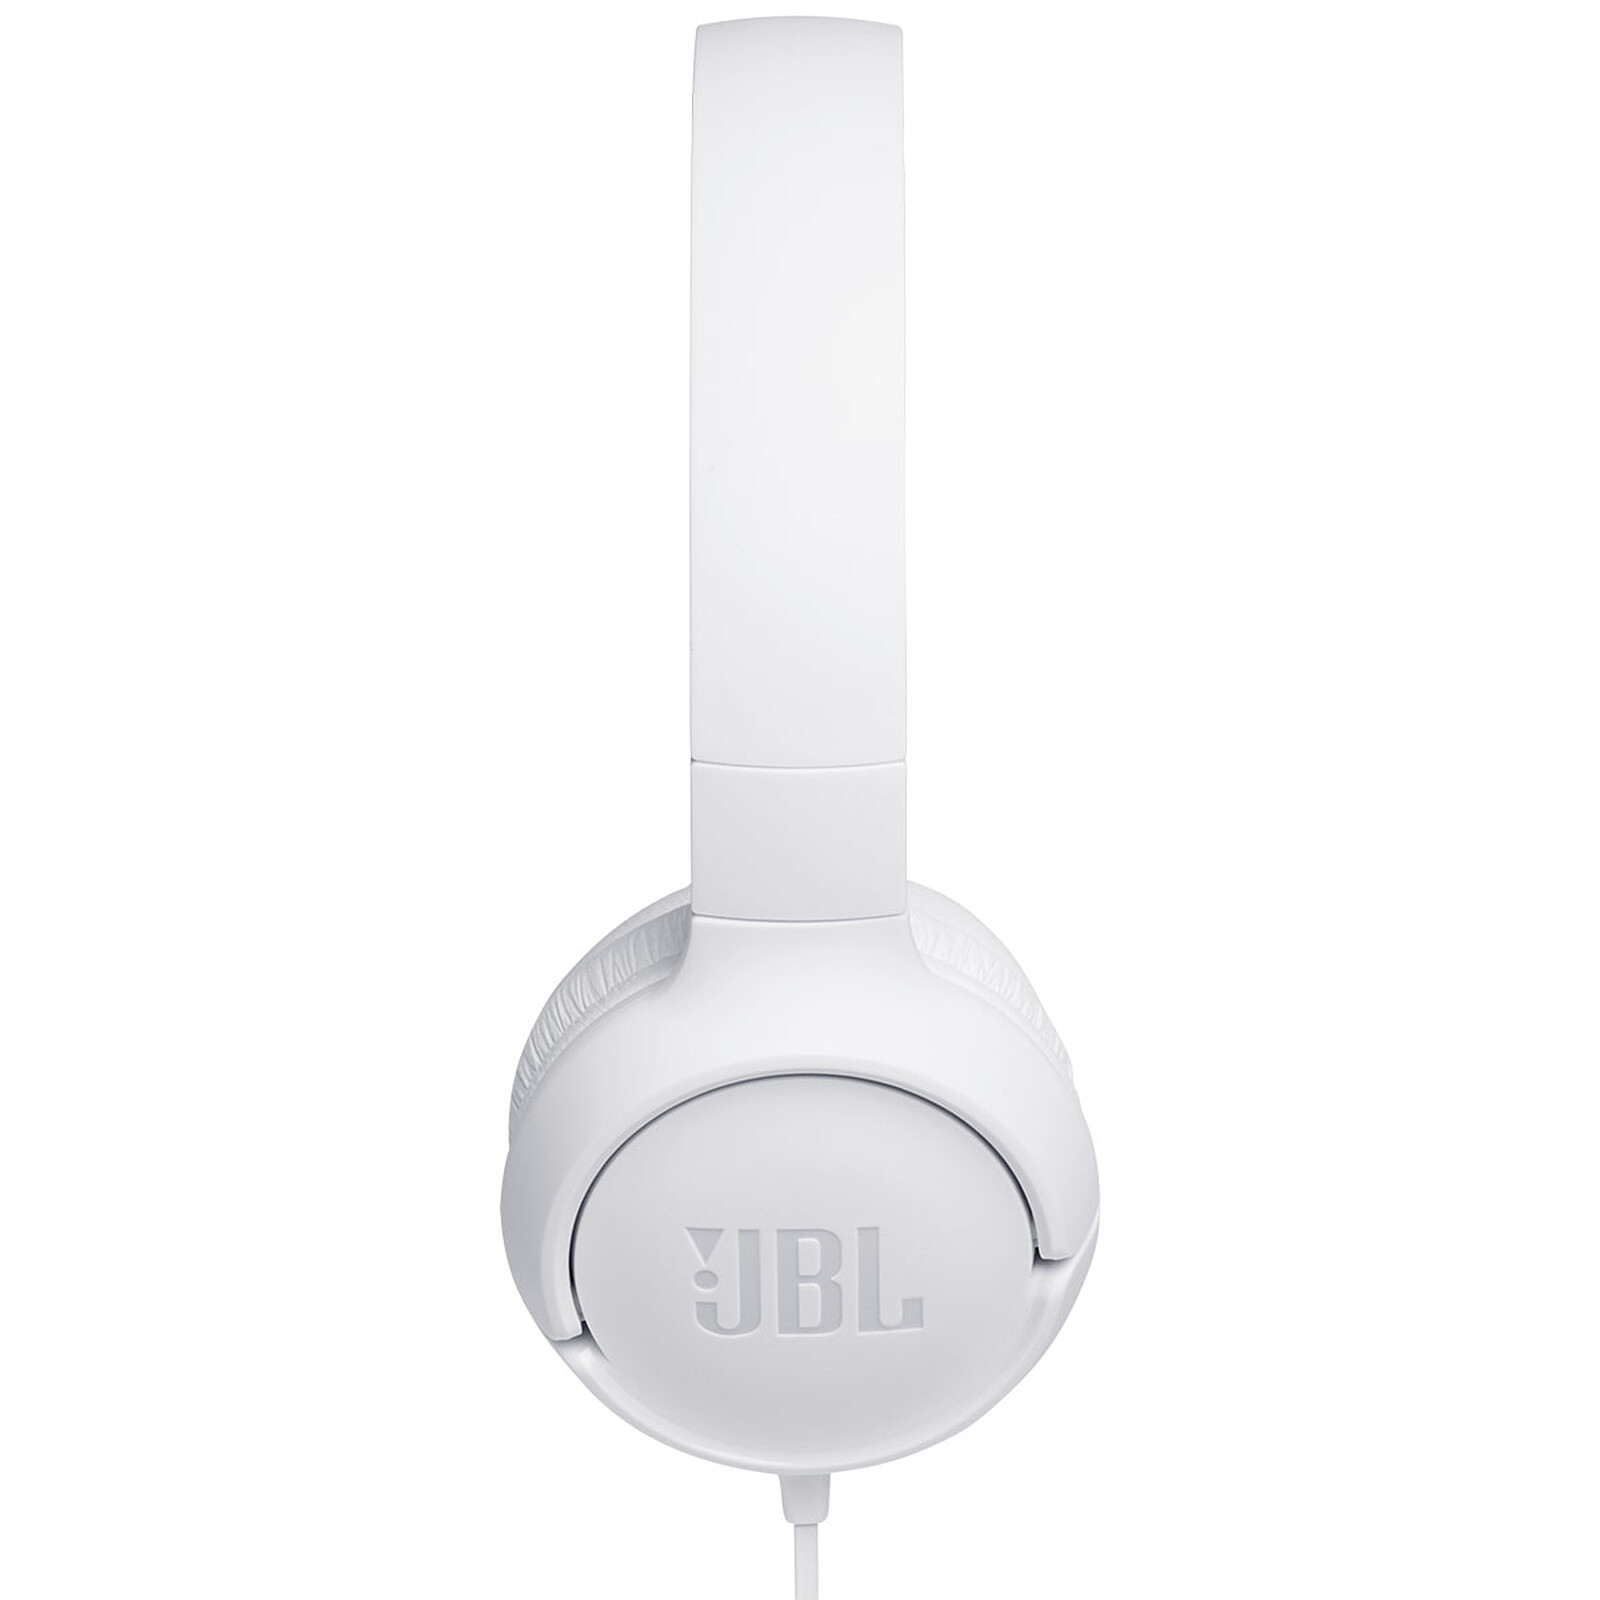 JBL - Casque Tune 500 Bluetooth - Noir